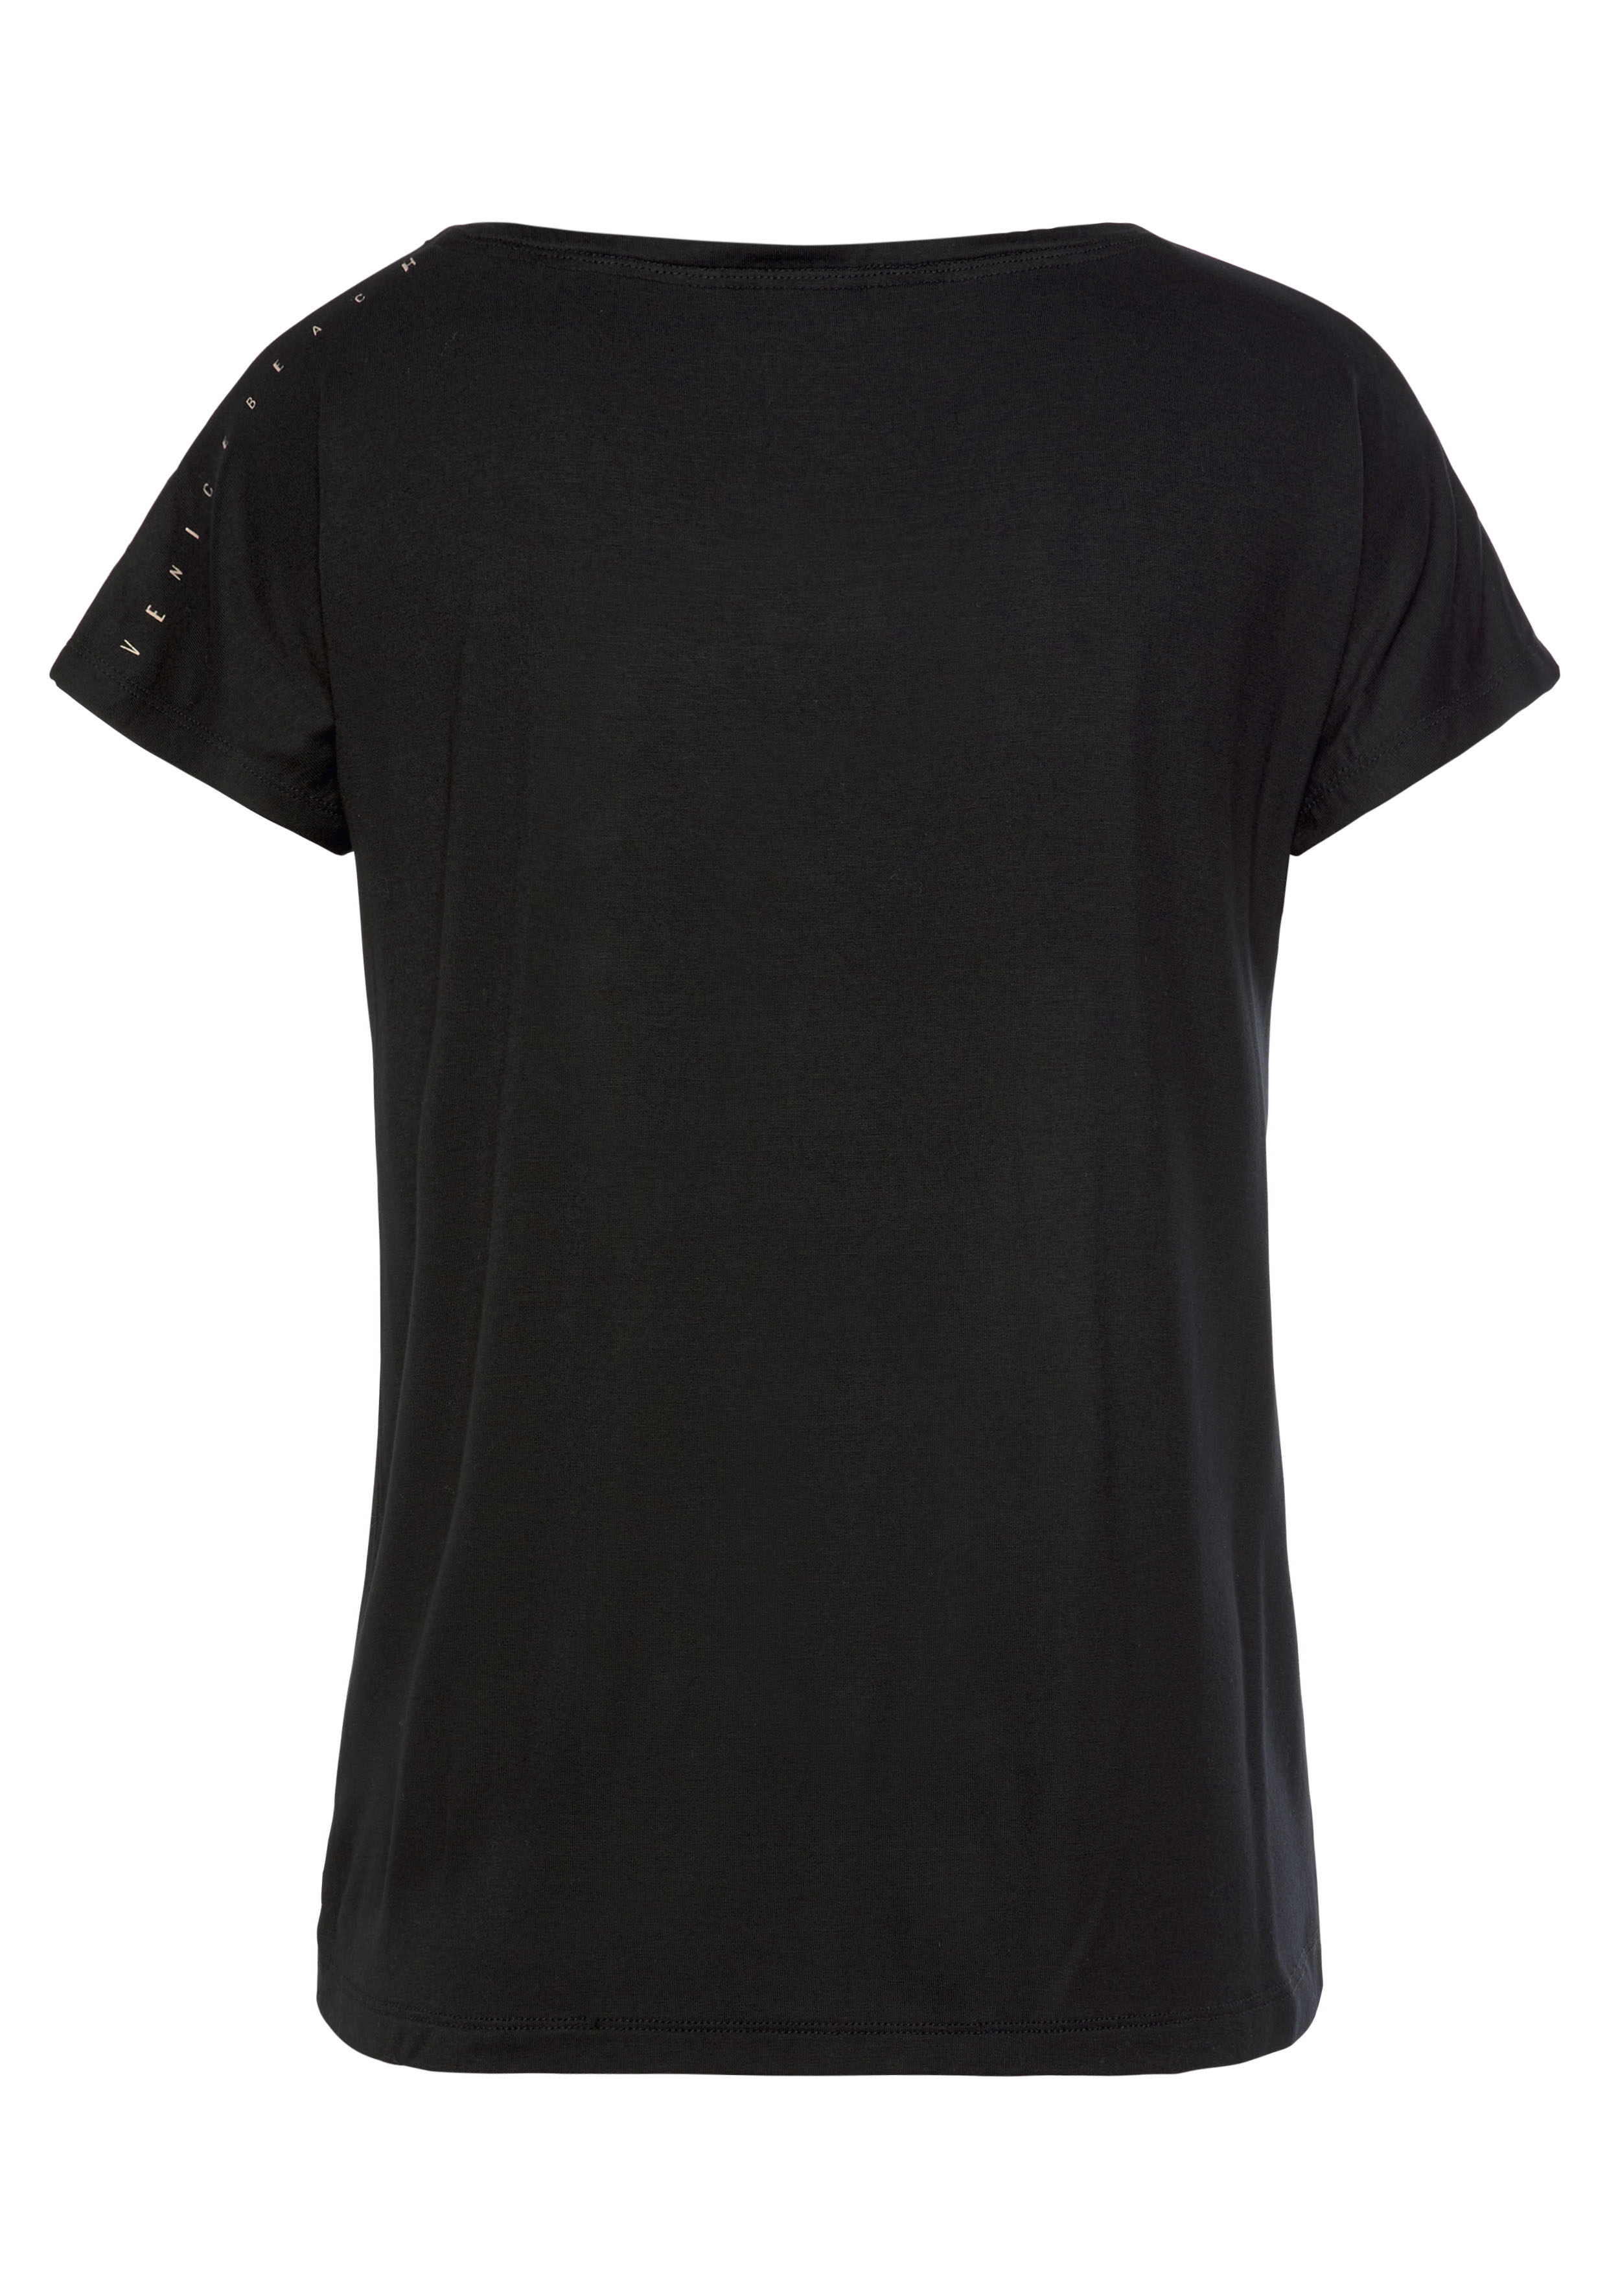 Venice Beach Kurzarmshirt, mit bedrucktem Einsatz am Saum » LASCANA |  Bademode, Unterwäsche & Lingerie online kaufen